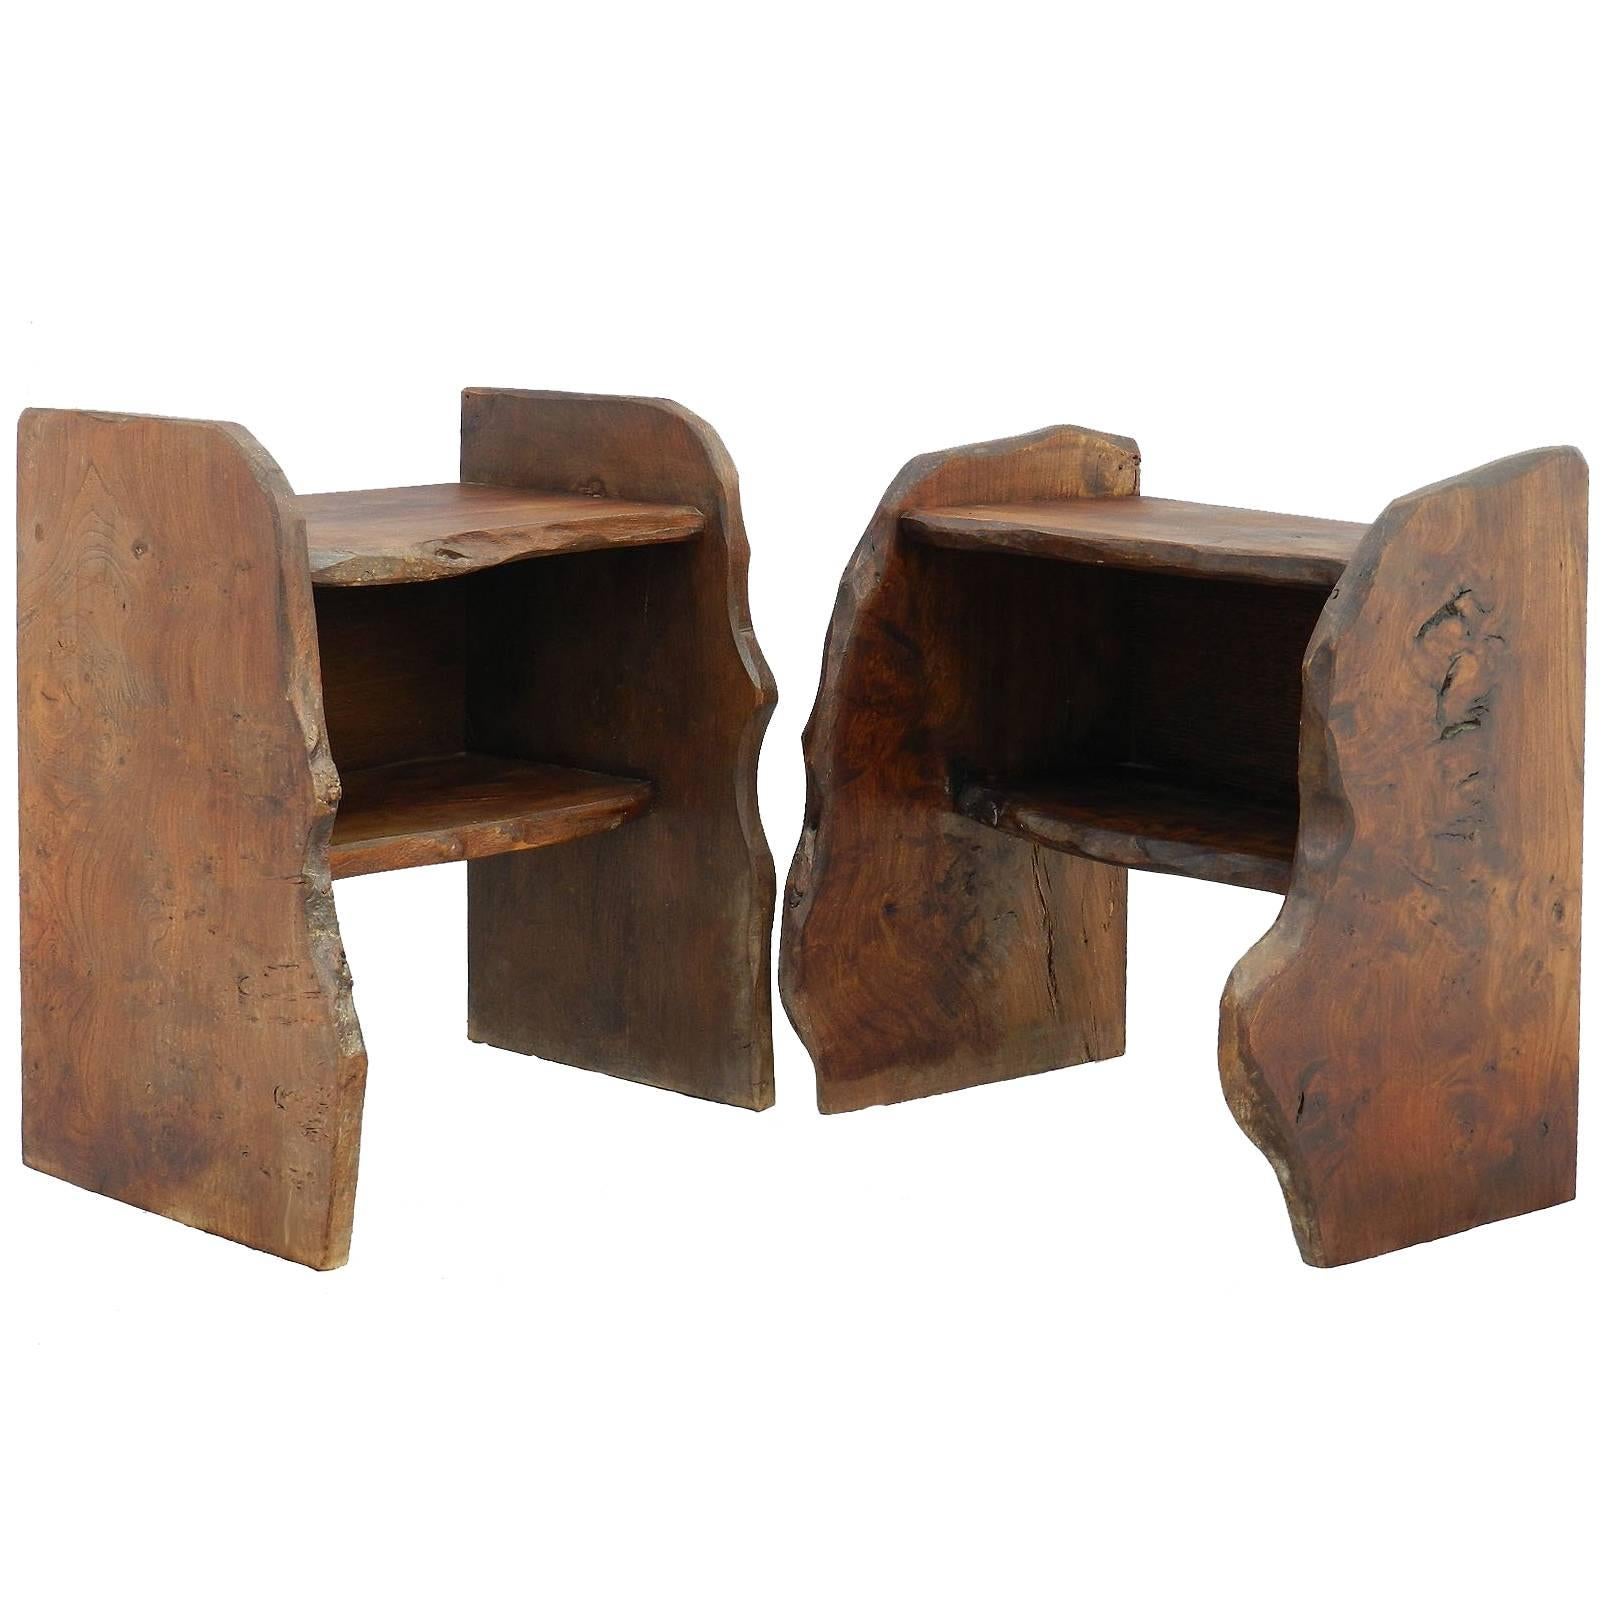 Pair of Side Tables Nightstands Bedside Cabinets Primitive Brutalist French 1920